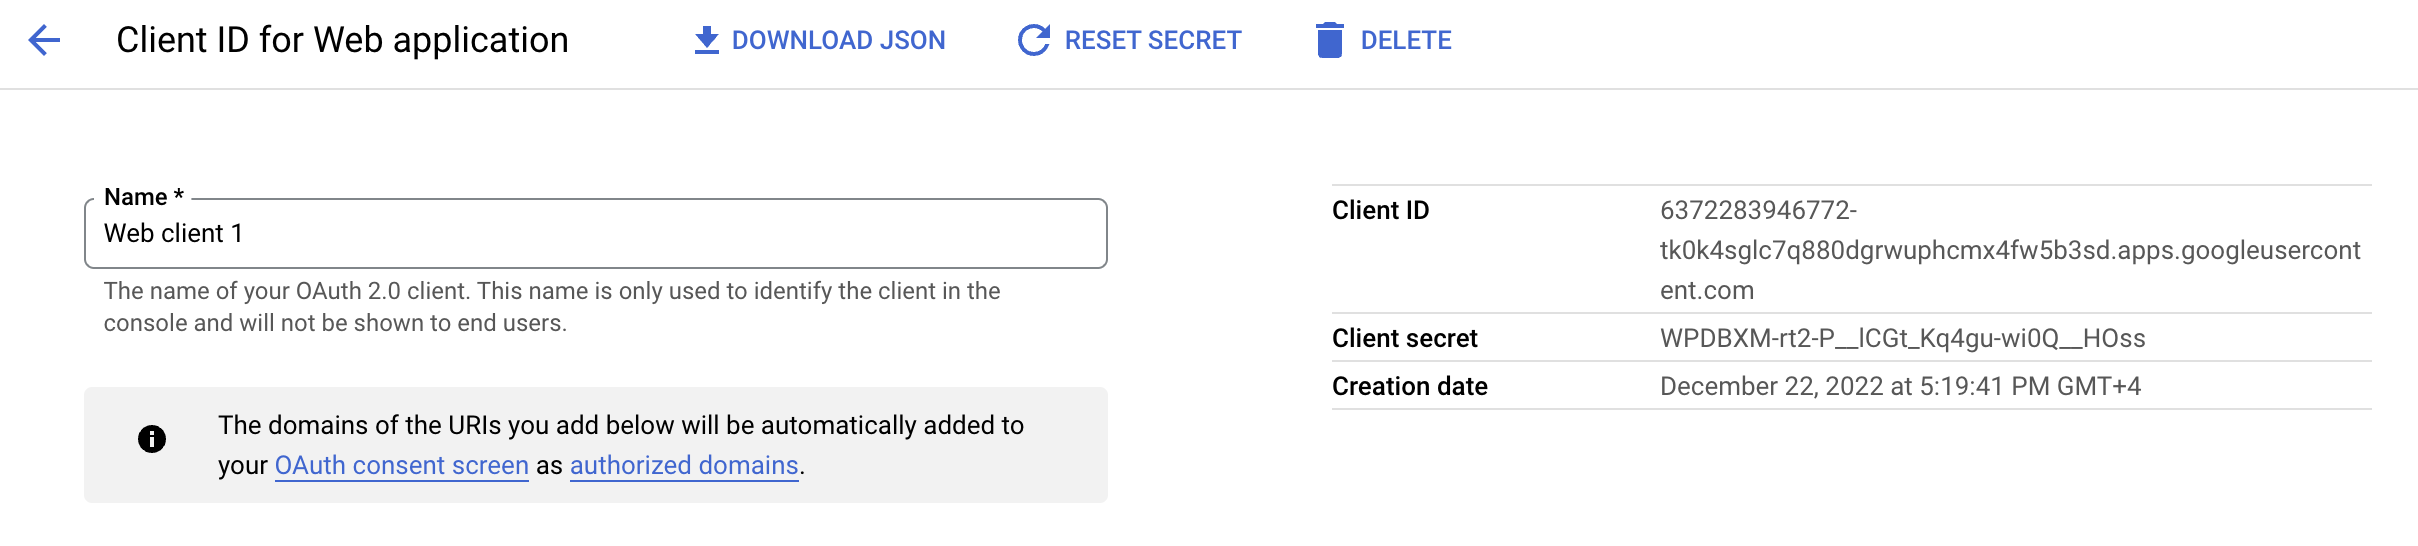 Client ID and Client secret in Google Cloud Console